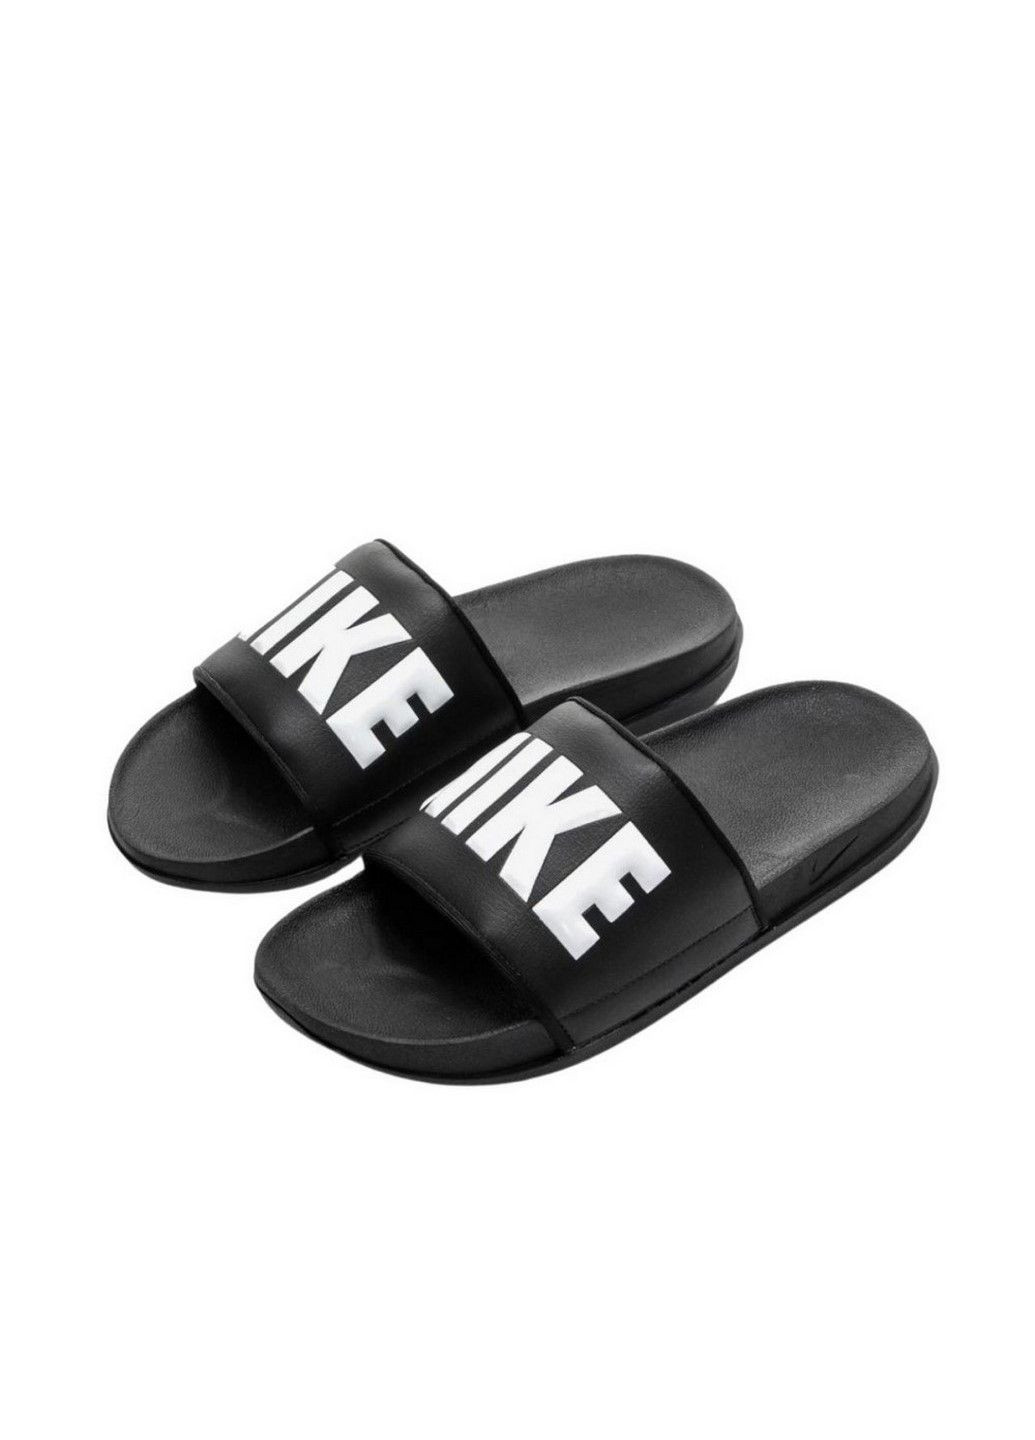 Черные тапочки (тапочки) wmns offcourt slide bq4632-010 Nike